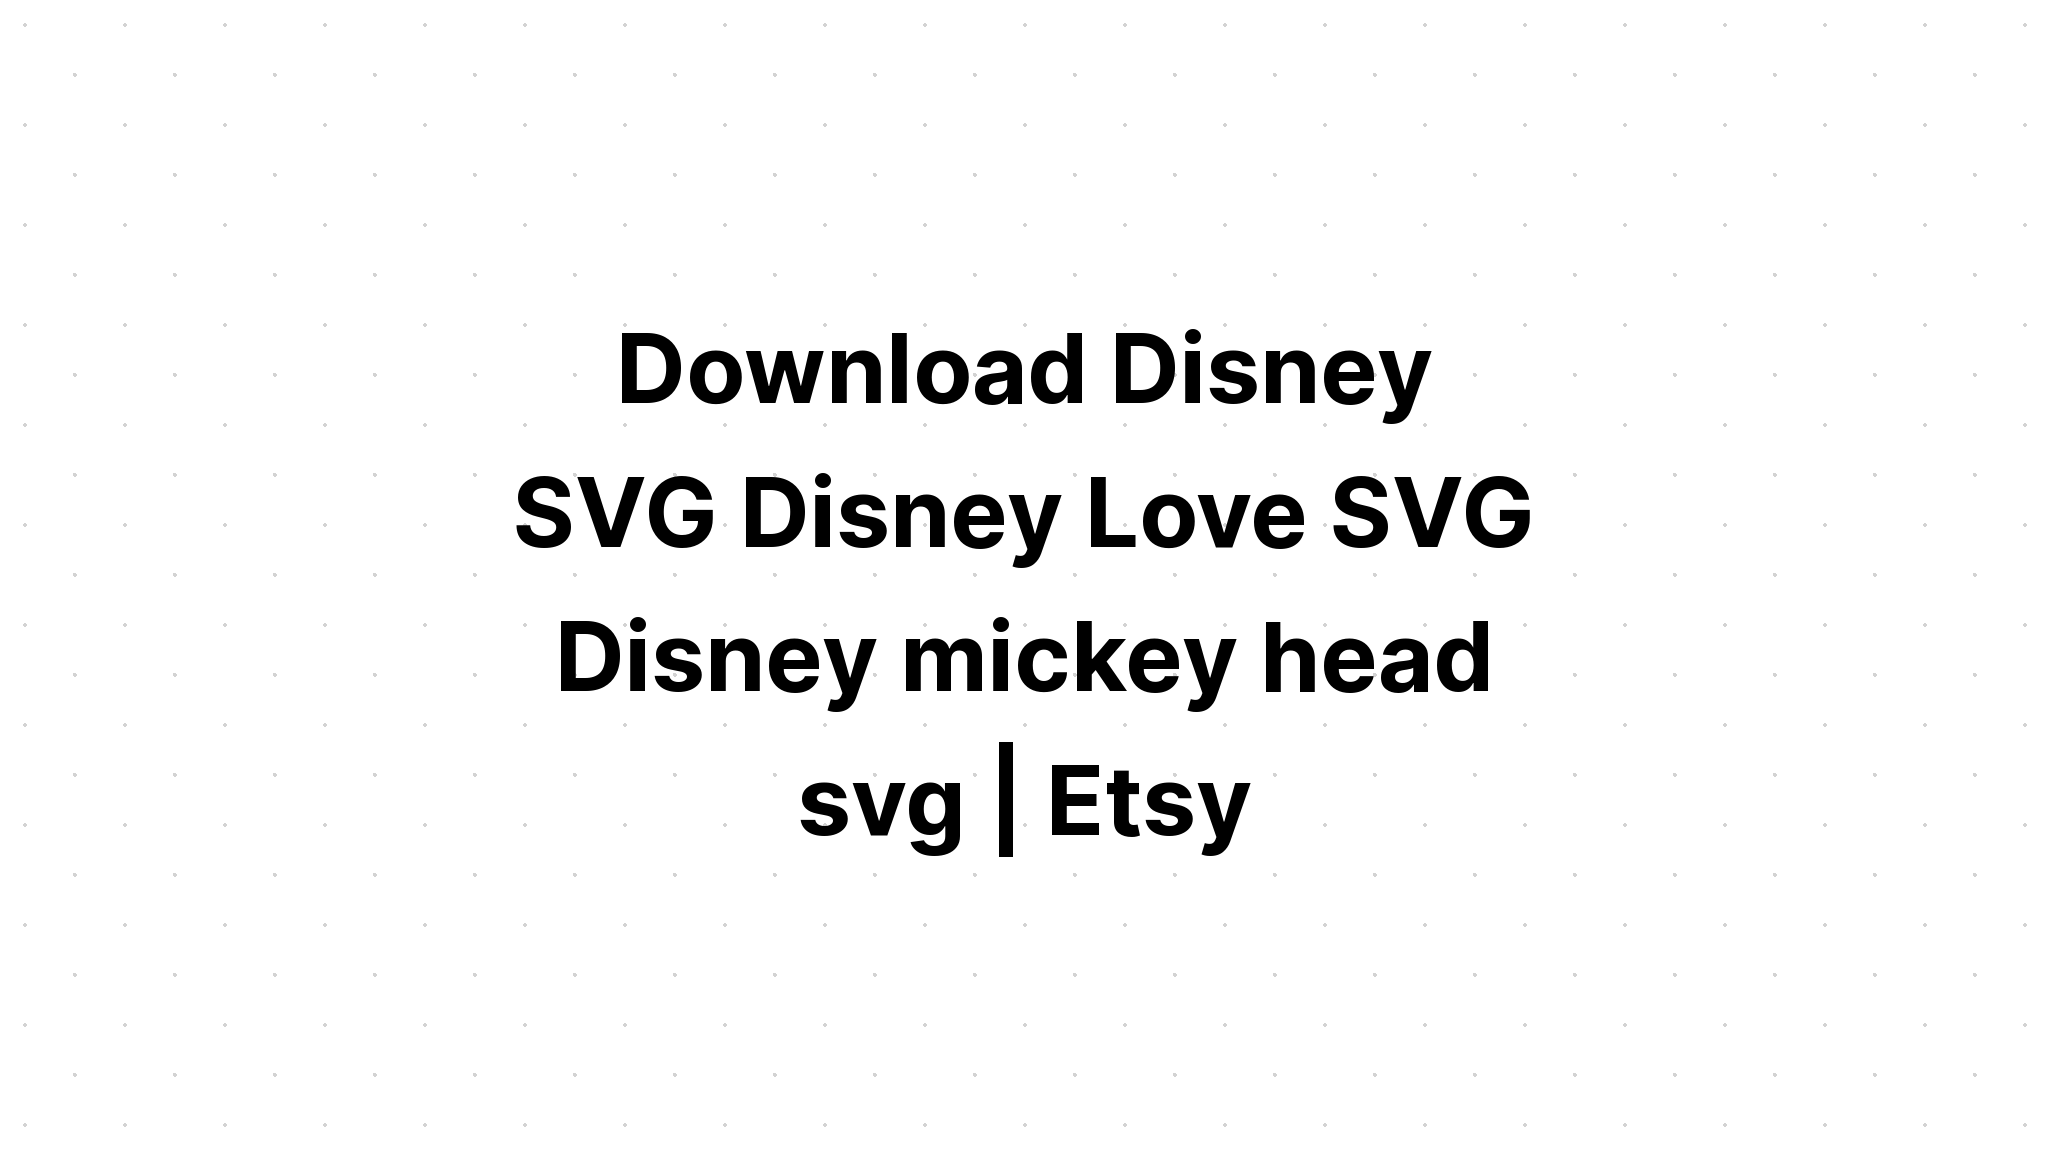 Download Love Micky Svg - Layered SVG Cut File